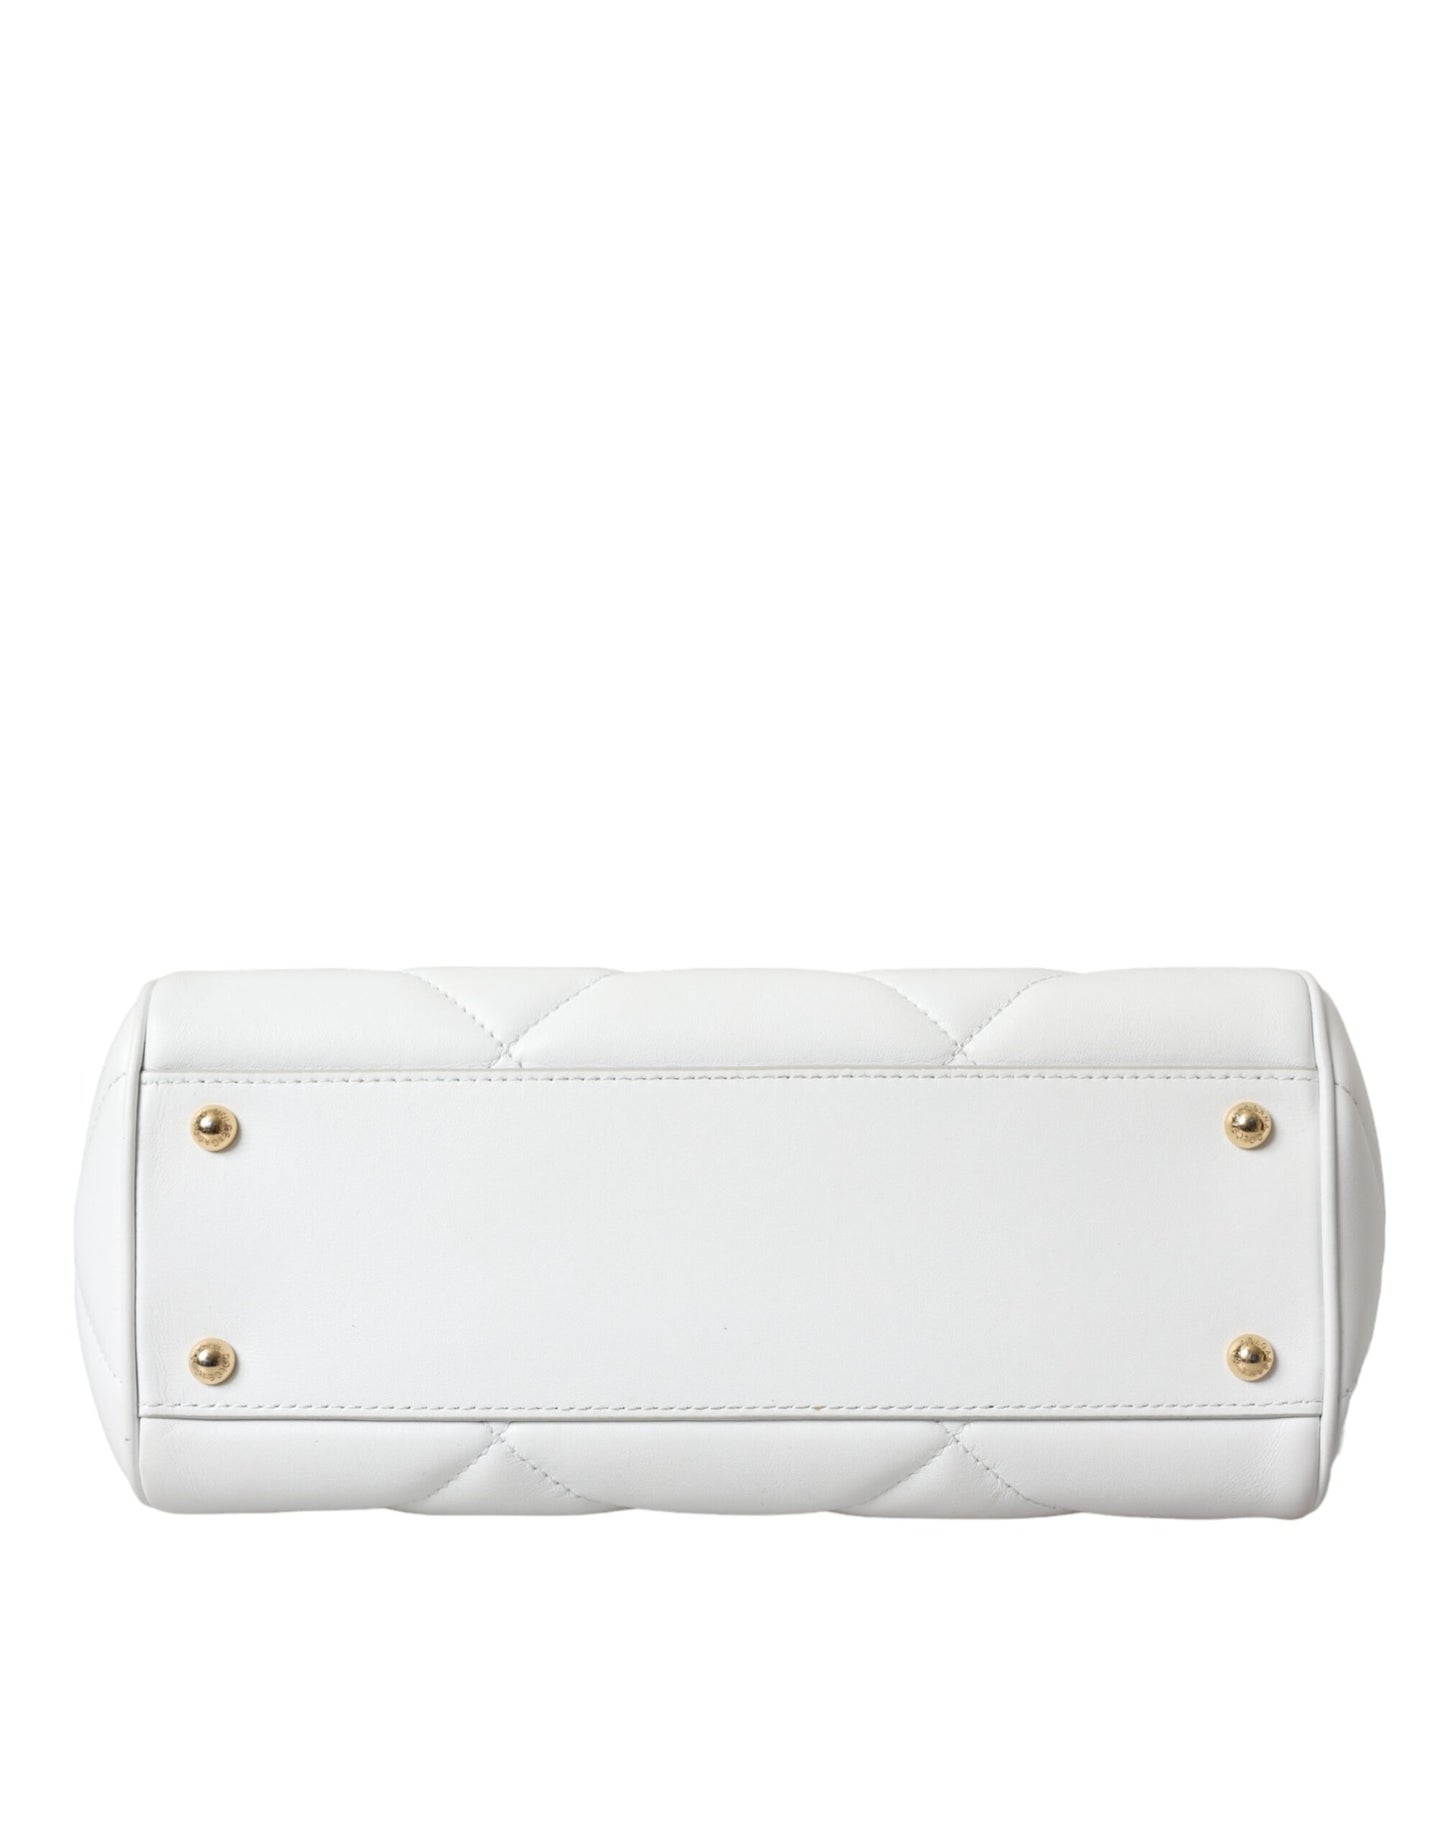 Dolce & Gabbana White Quilted Leather SICILY Hand Shoulder Purse Satchel Bag